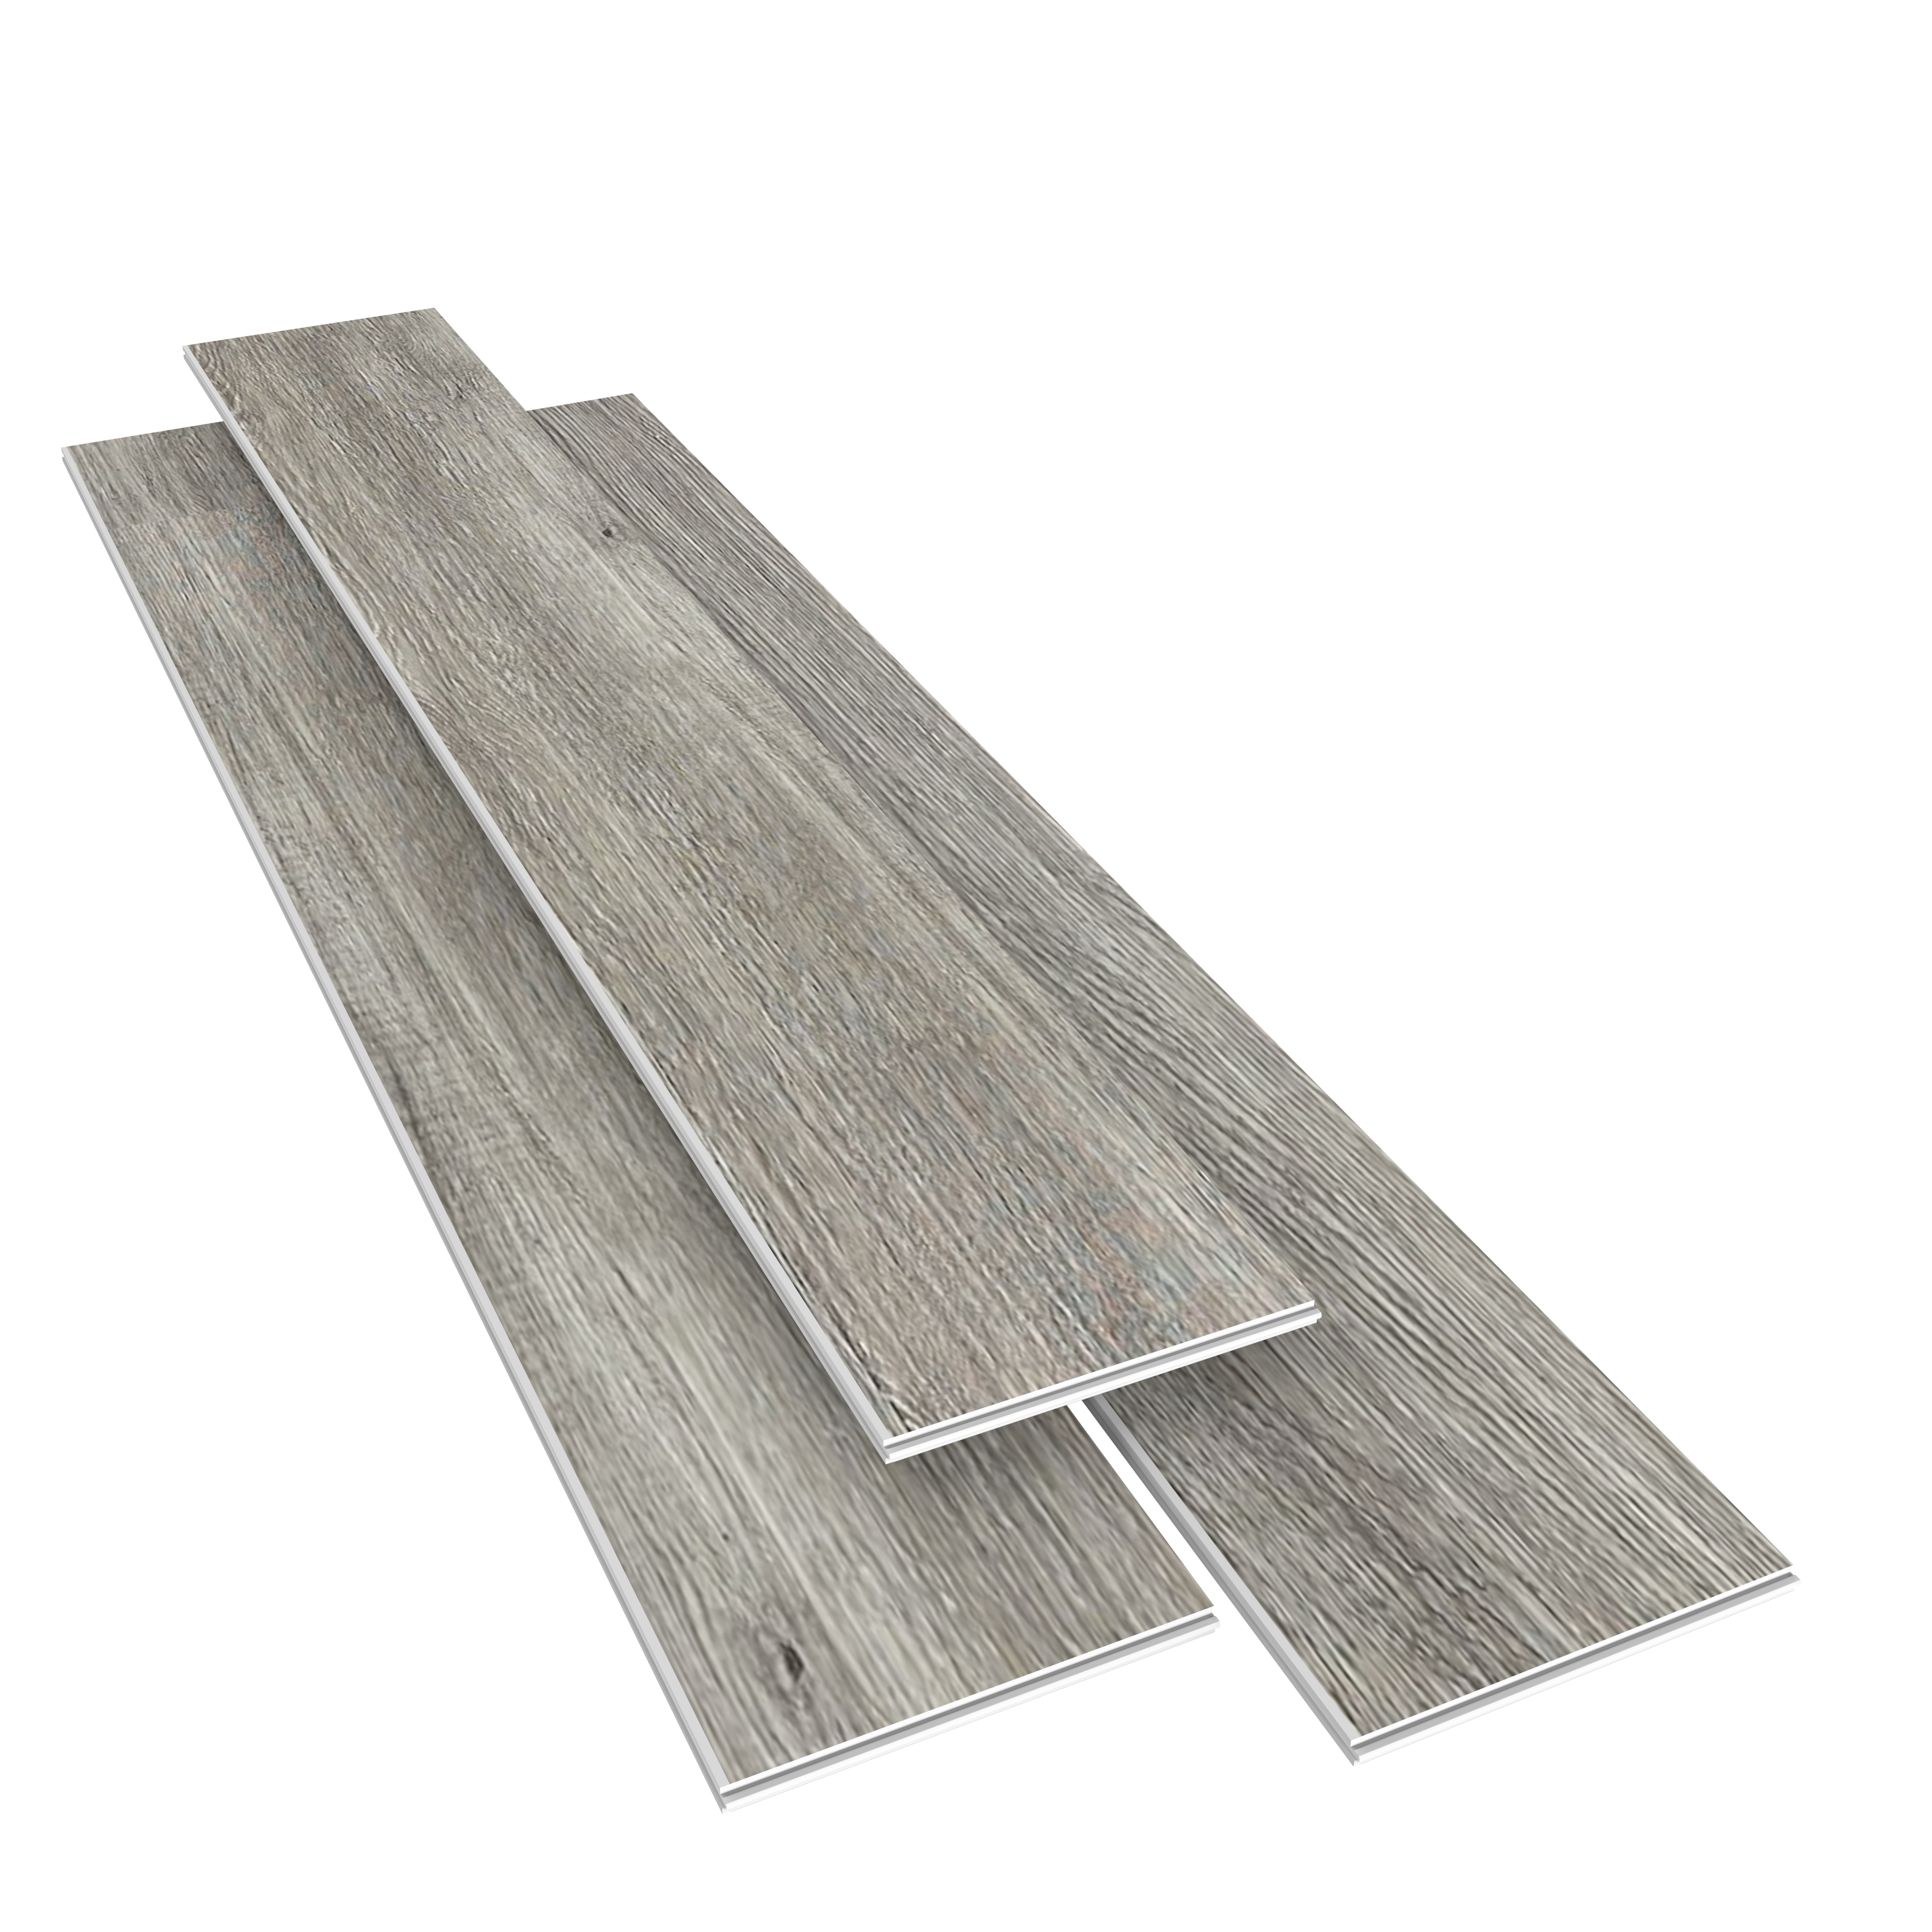 SPC Rigid Core Plank Cannon Flooring, 7" x 48" x 6mm, 22 mil Wear Layer